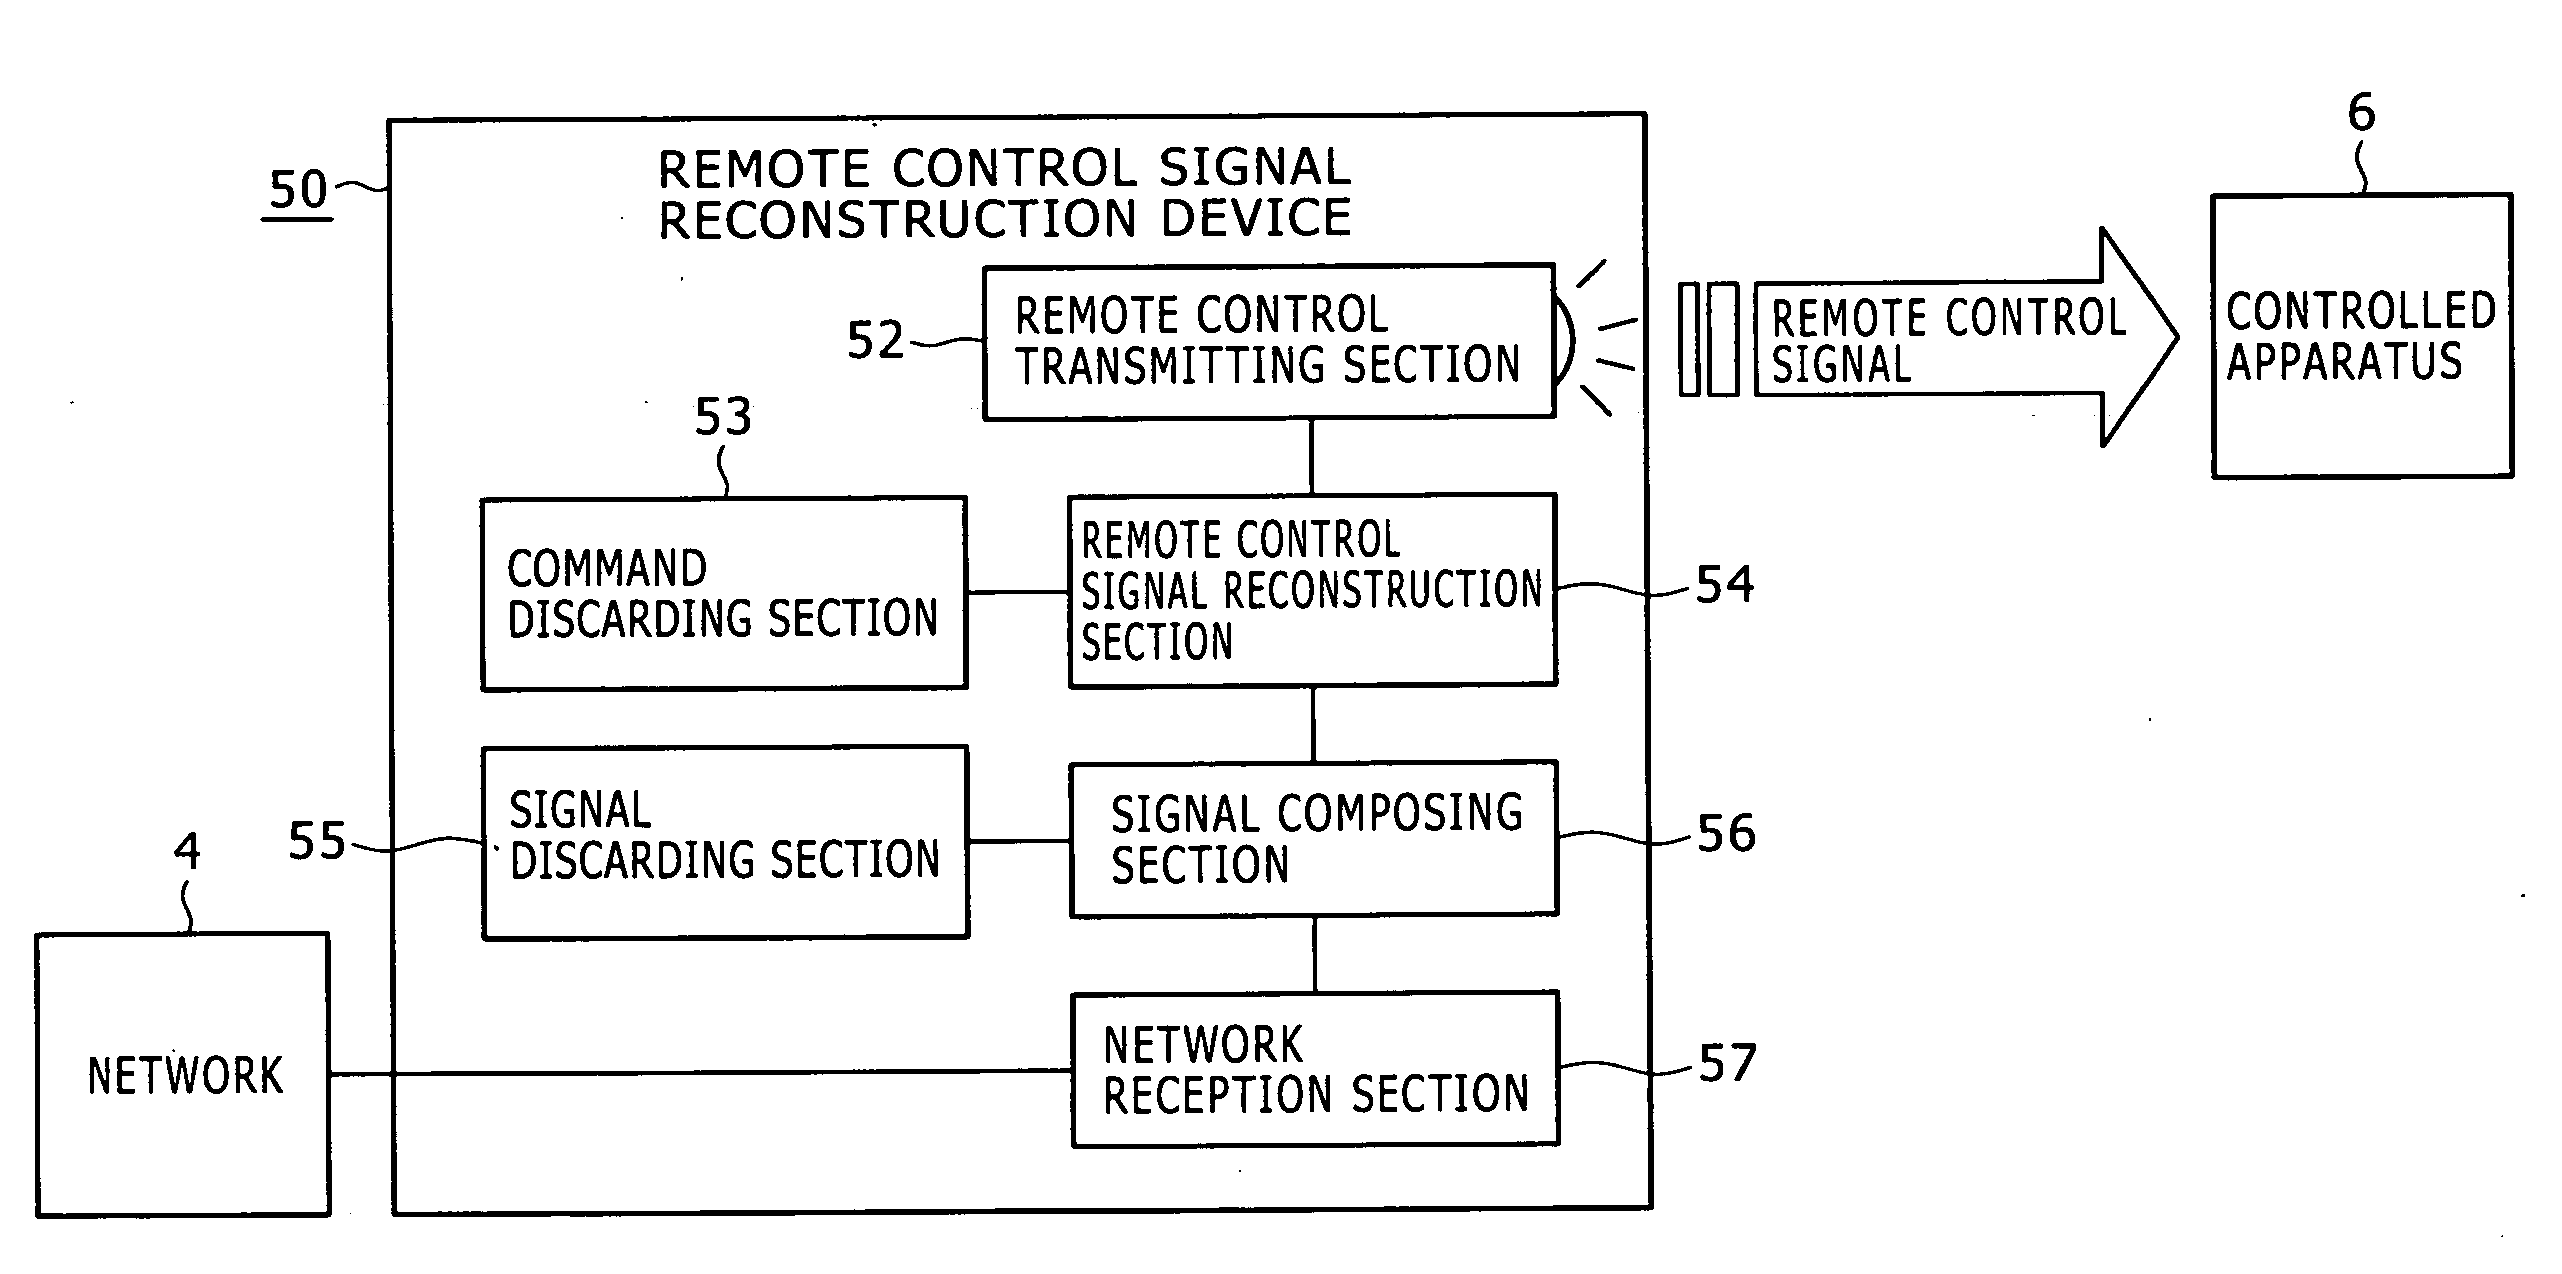 Remote control signal transfer system